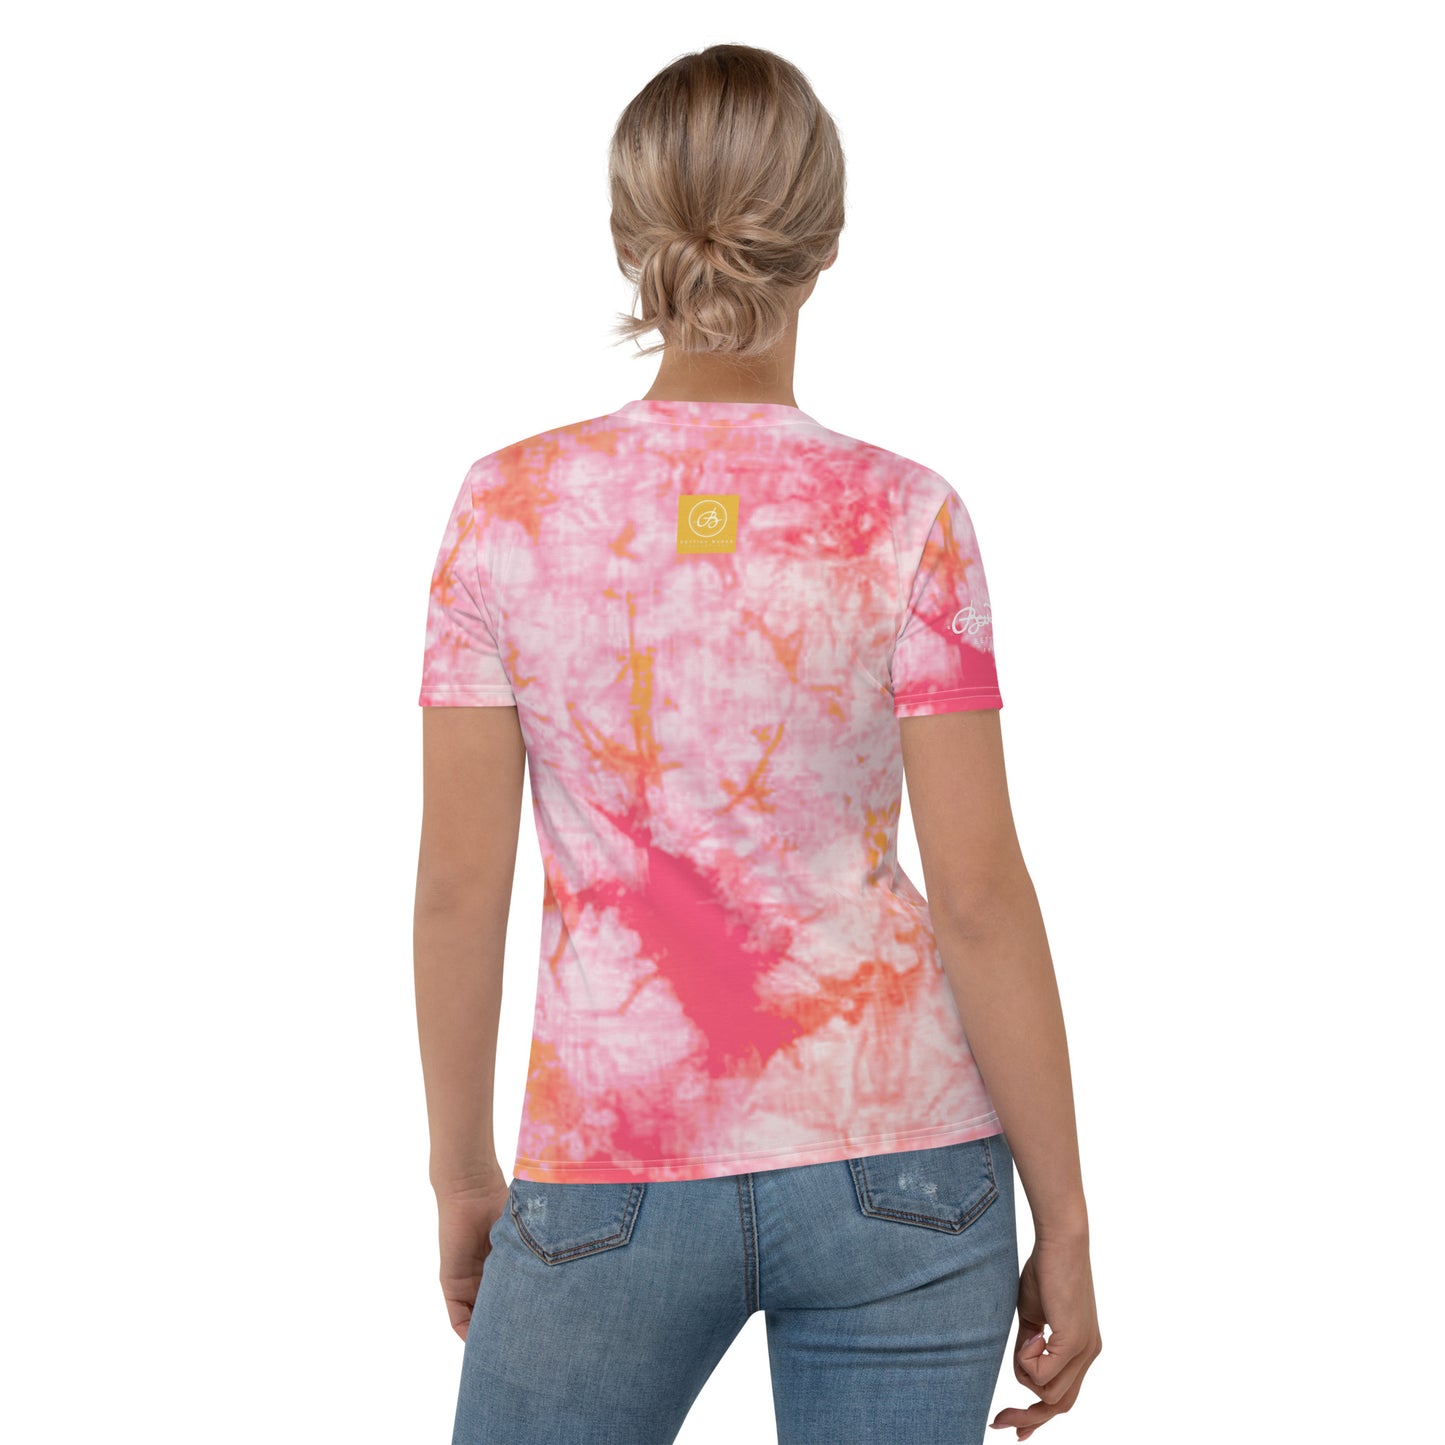 Fantasia Tie Dye Women's T-shirt